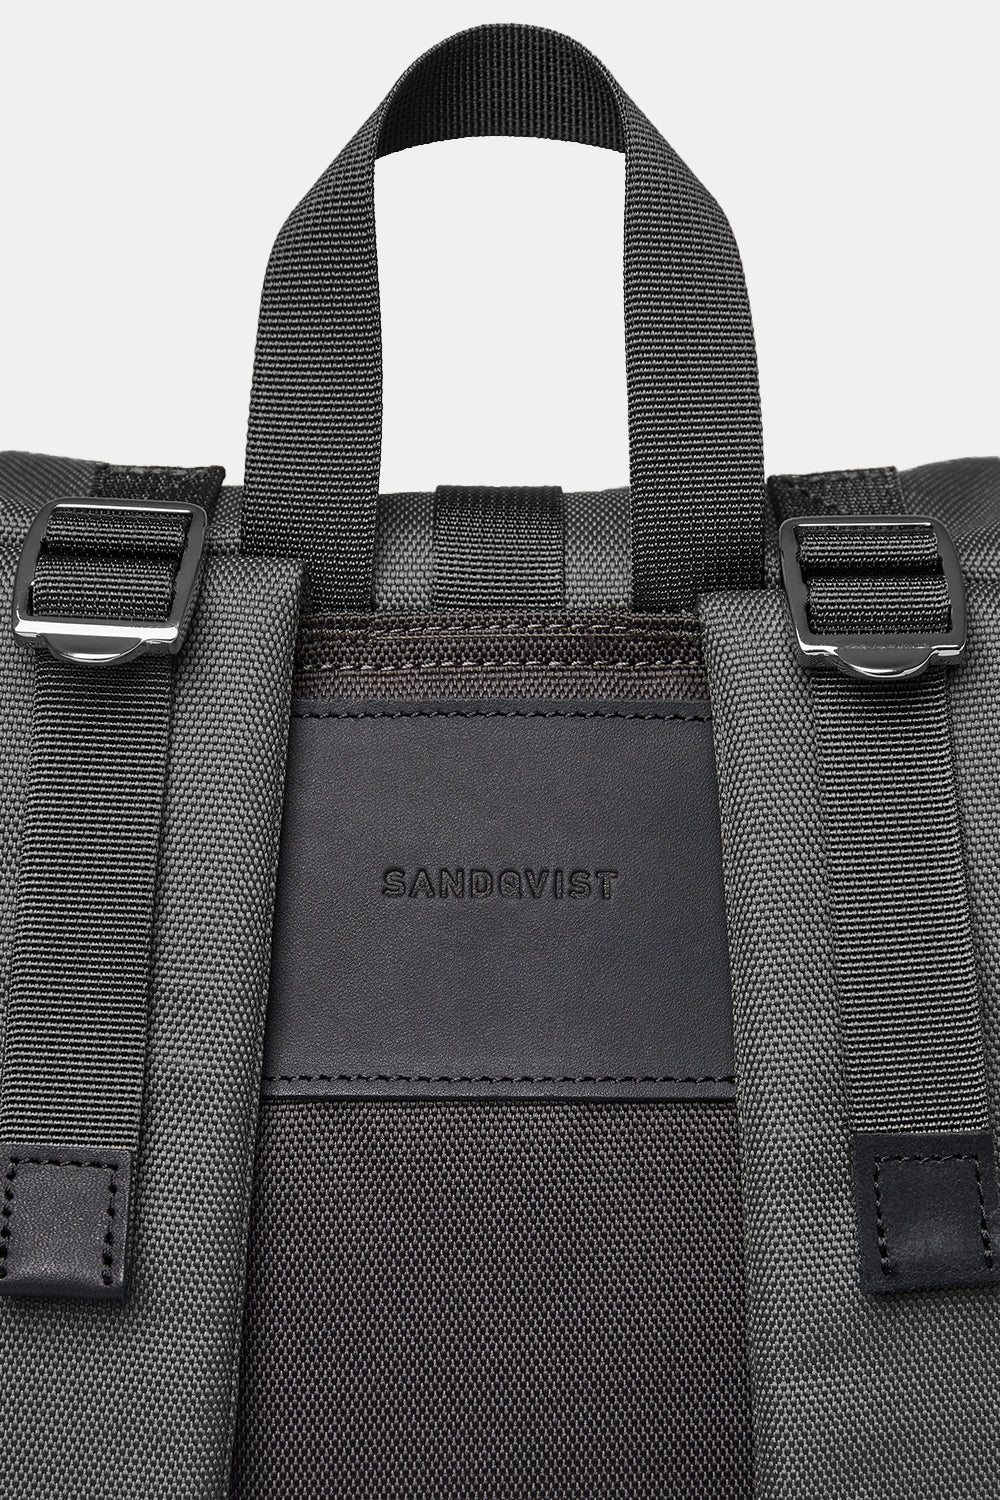 Sandqvist Bernt Backpack (Multi Dark)